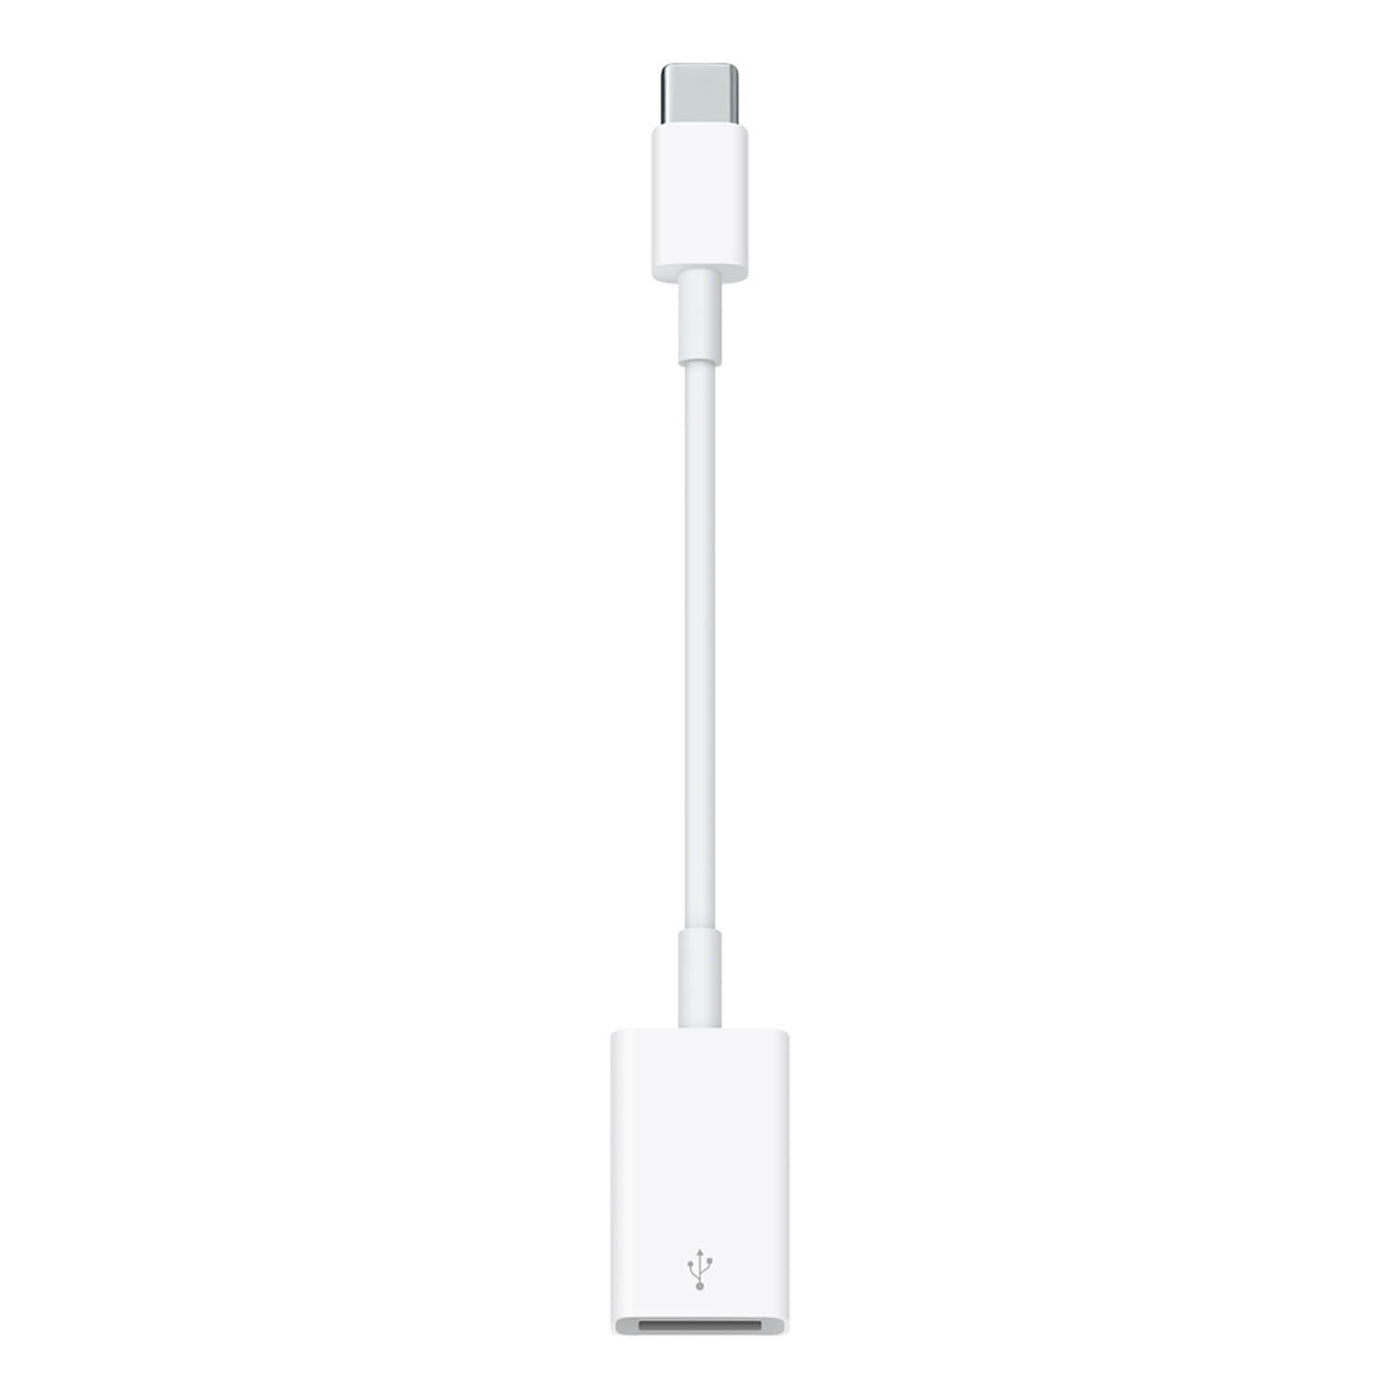 Apple USB-C USB Adapter – The Store